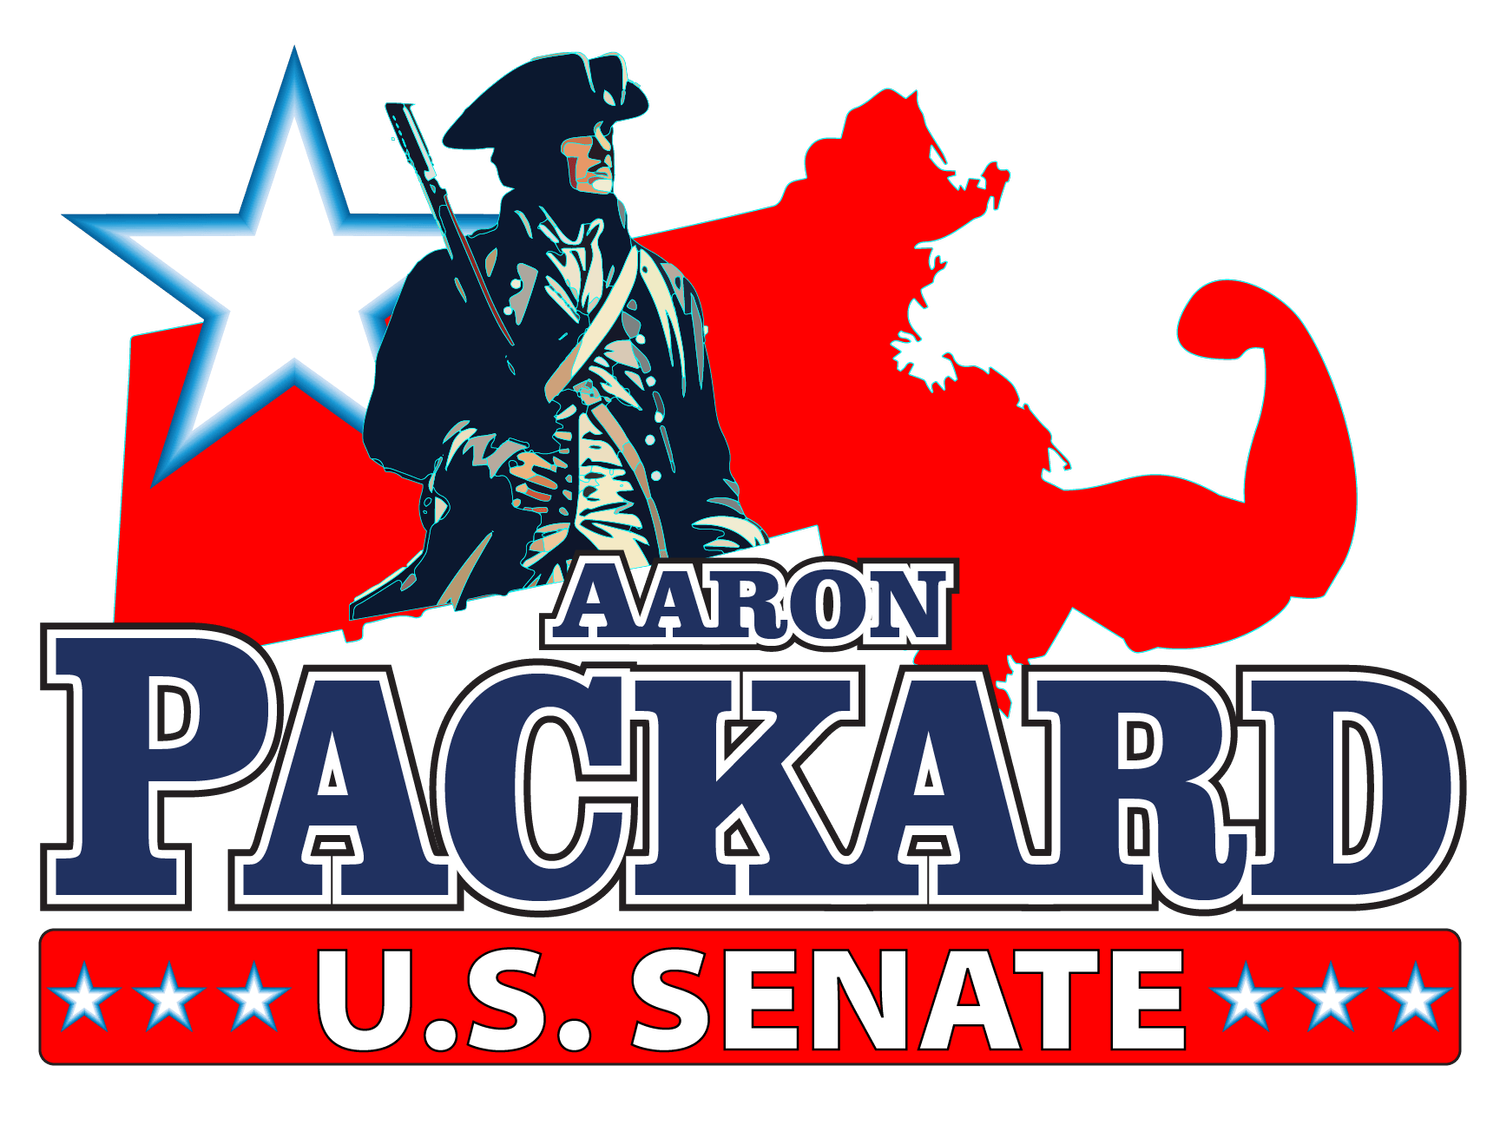 Aaron Packard for US Senate